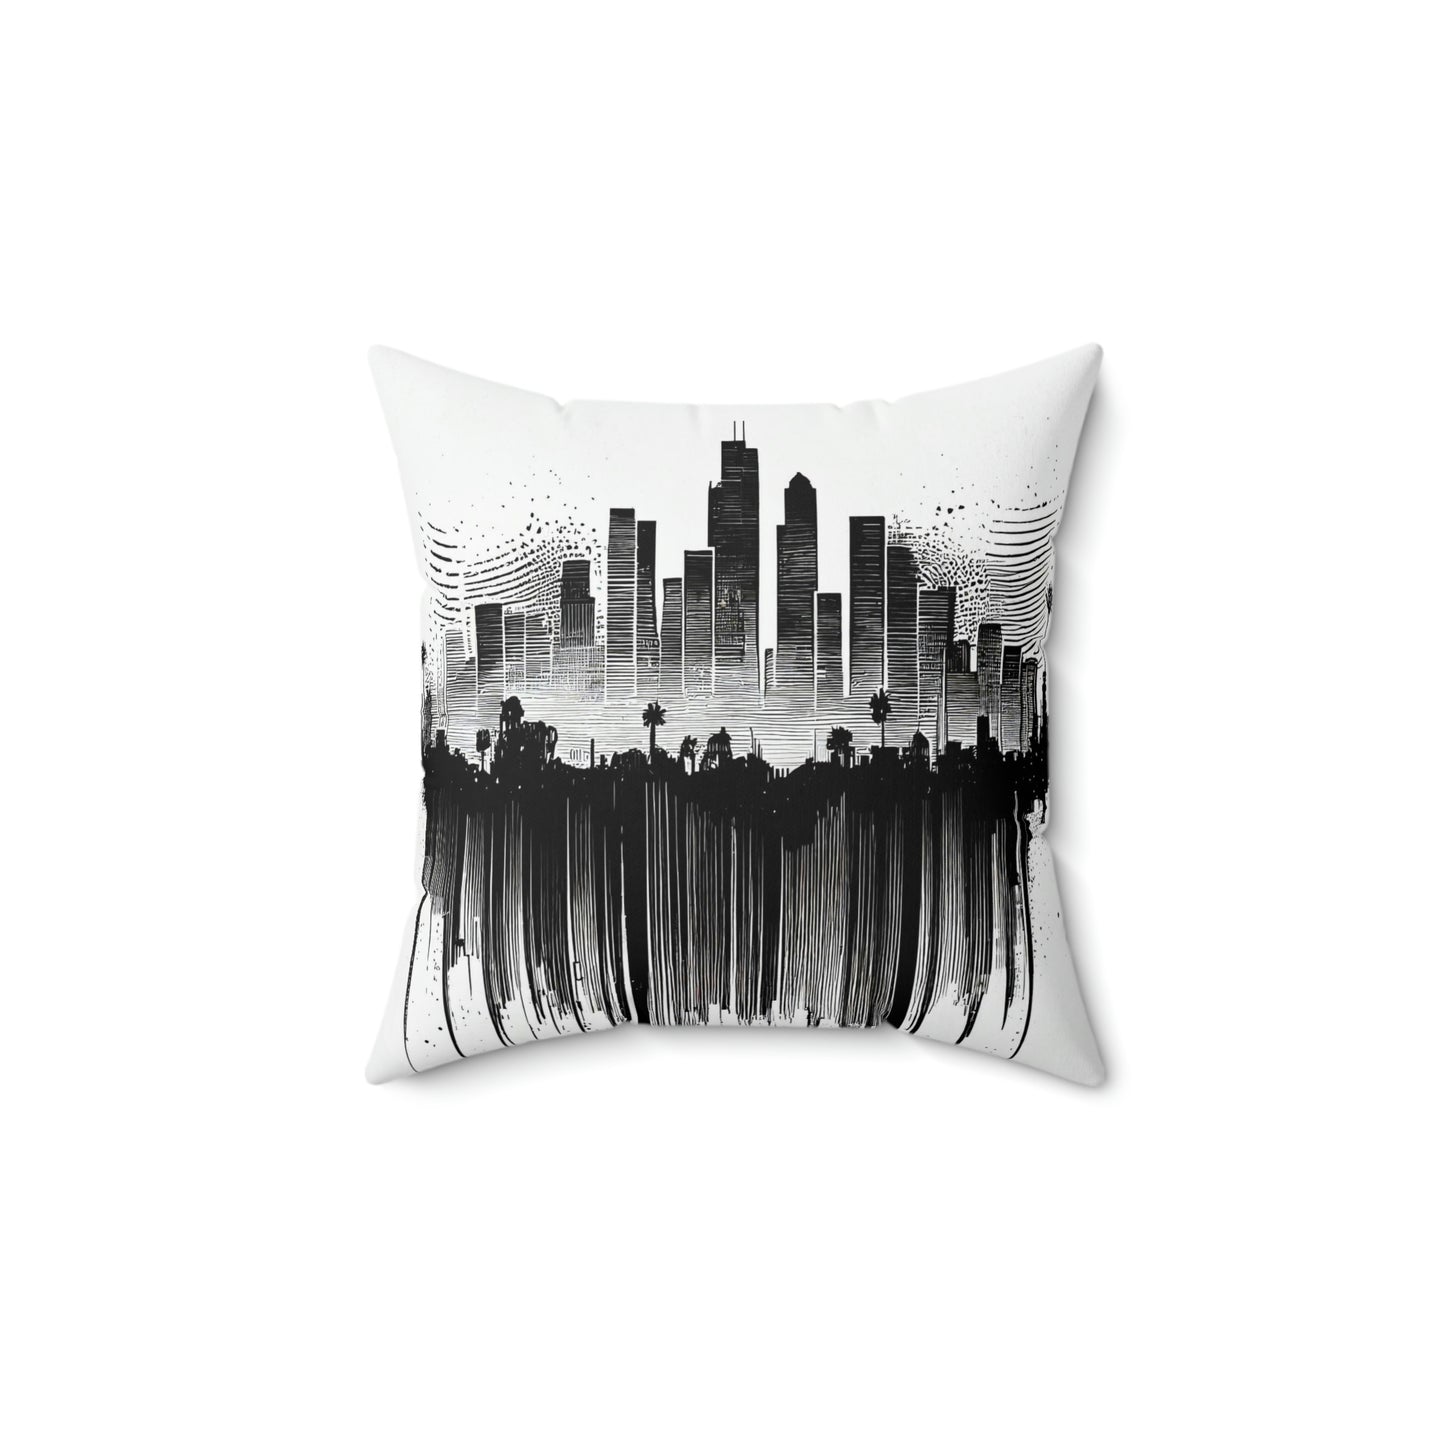 Urban city skyline - Spun Polyester Square Pillow Case